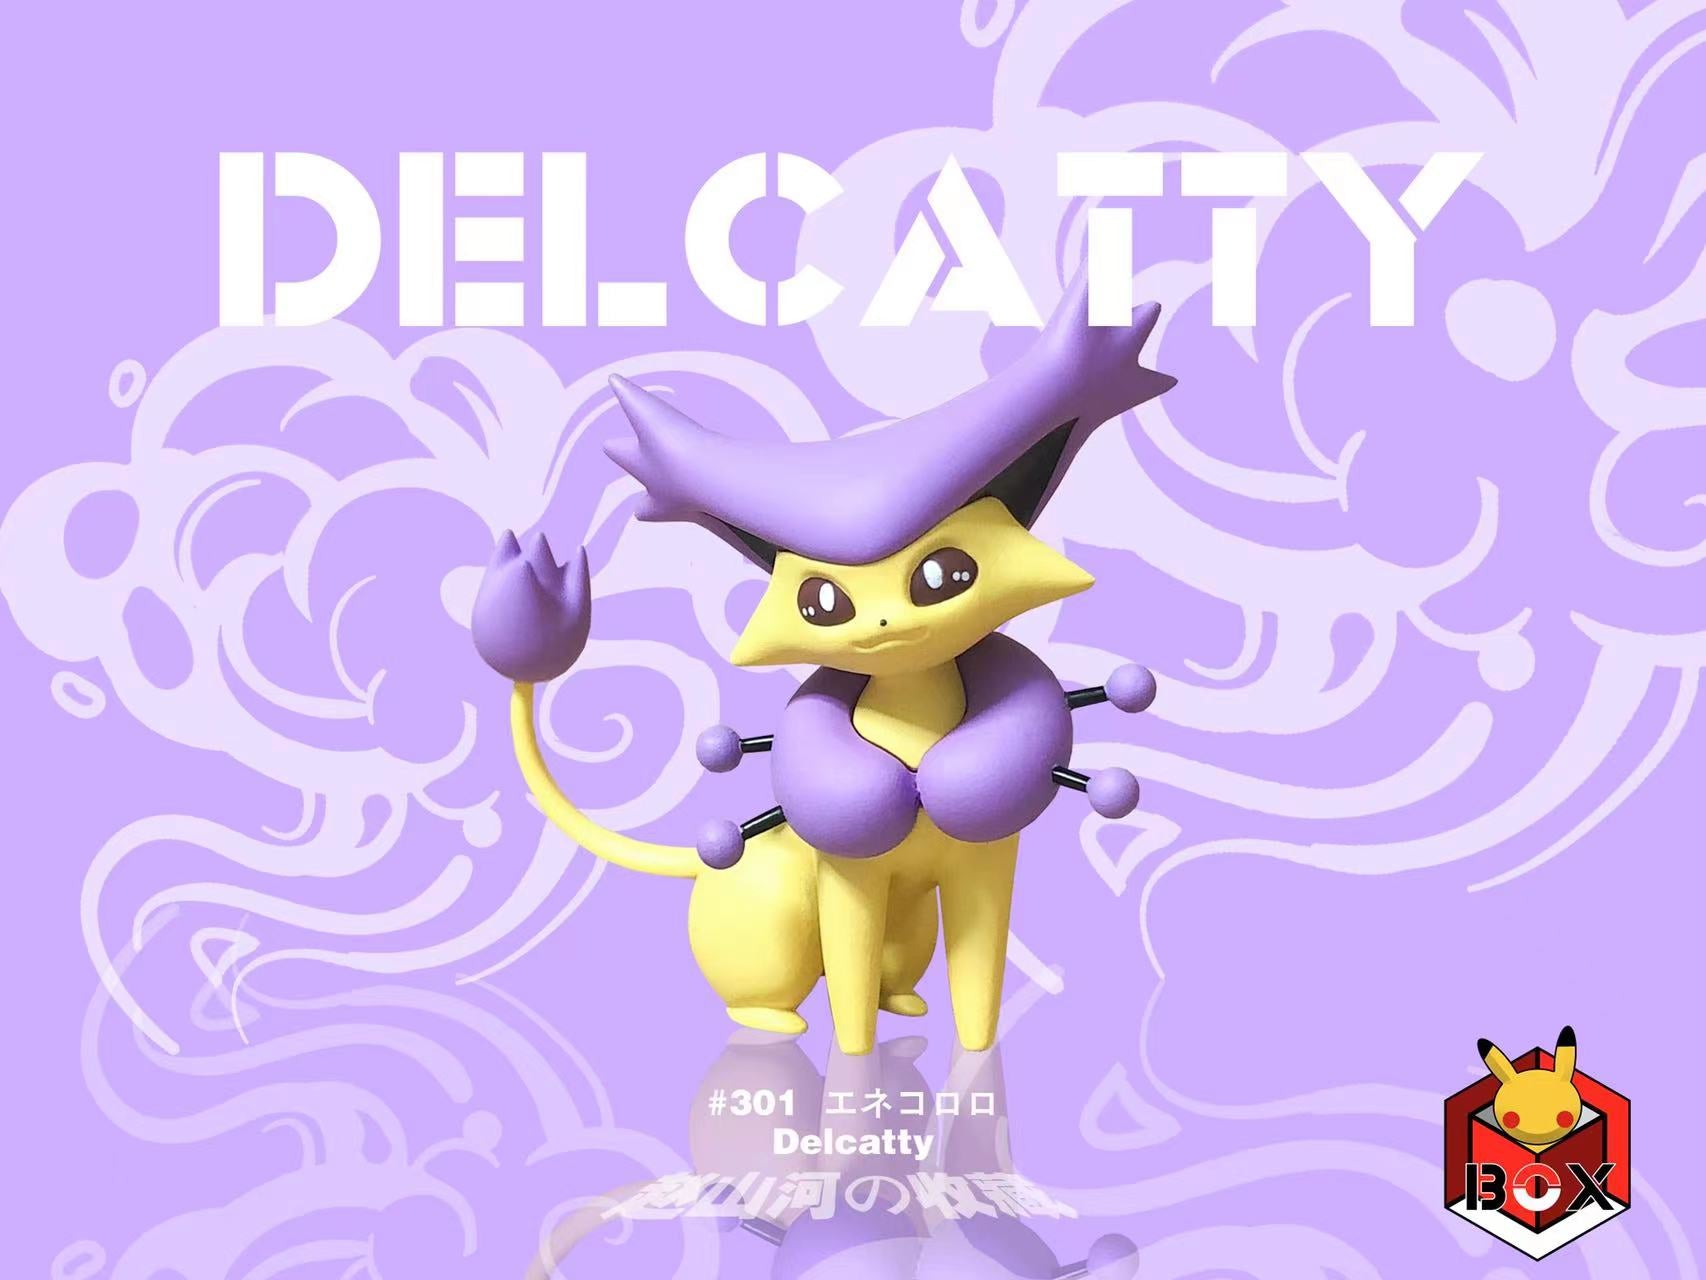 pokemon shiny delcatty